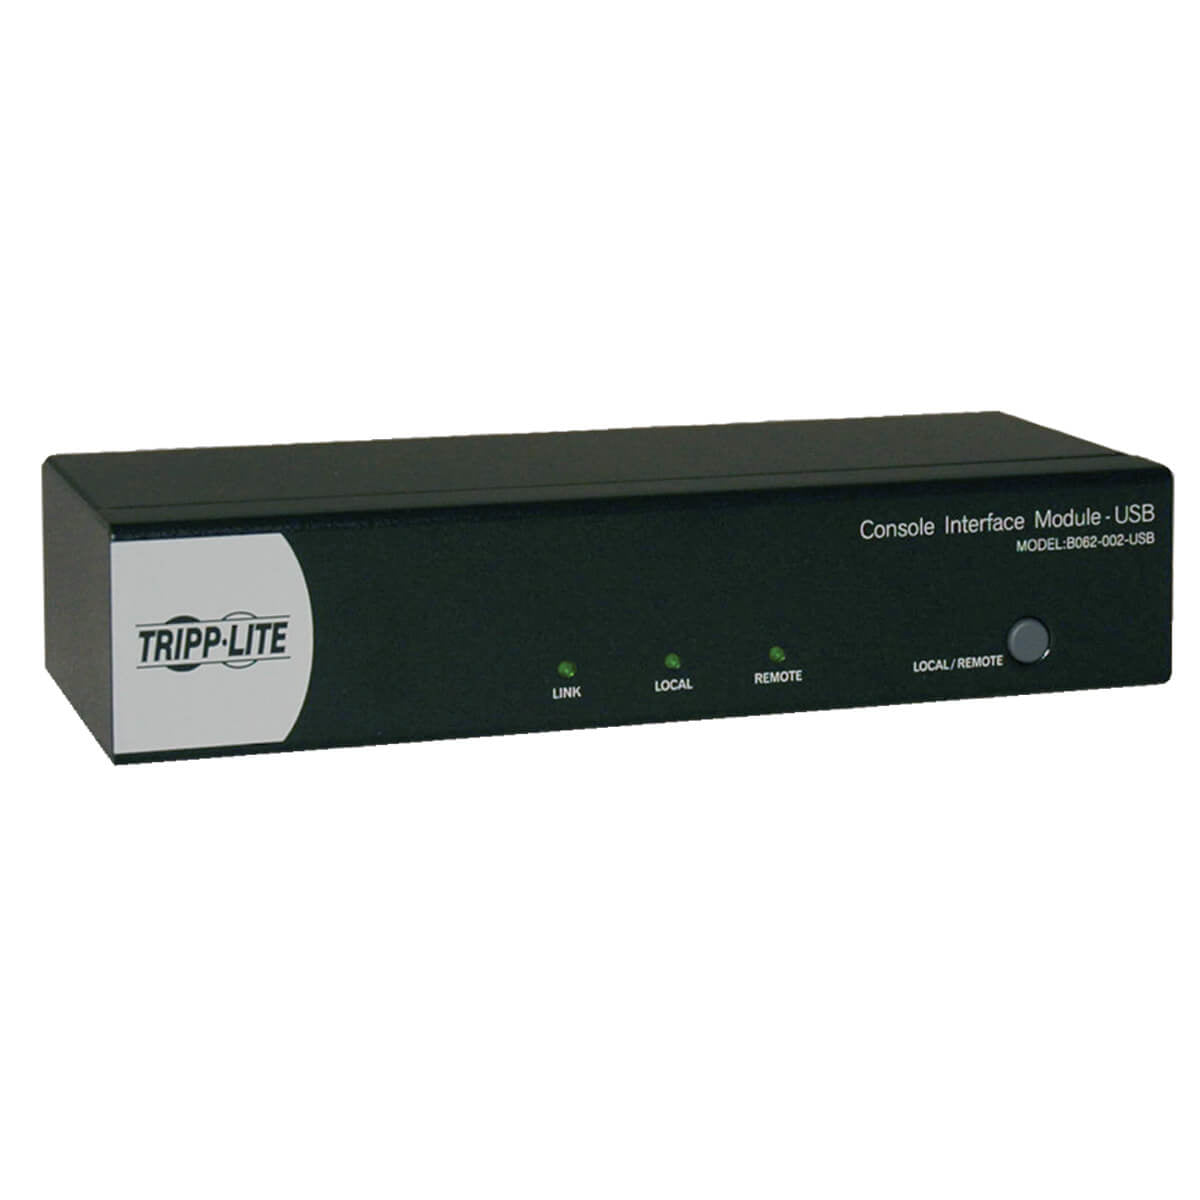 B062-002-USB - Tripp Lite - KVM switch Black